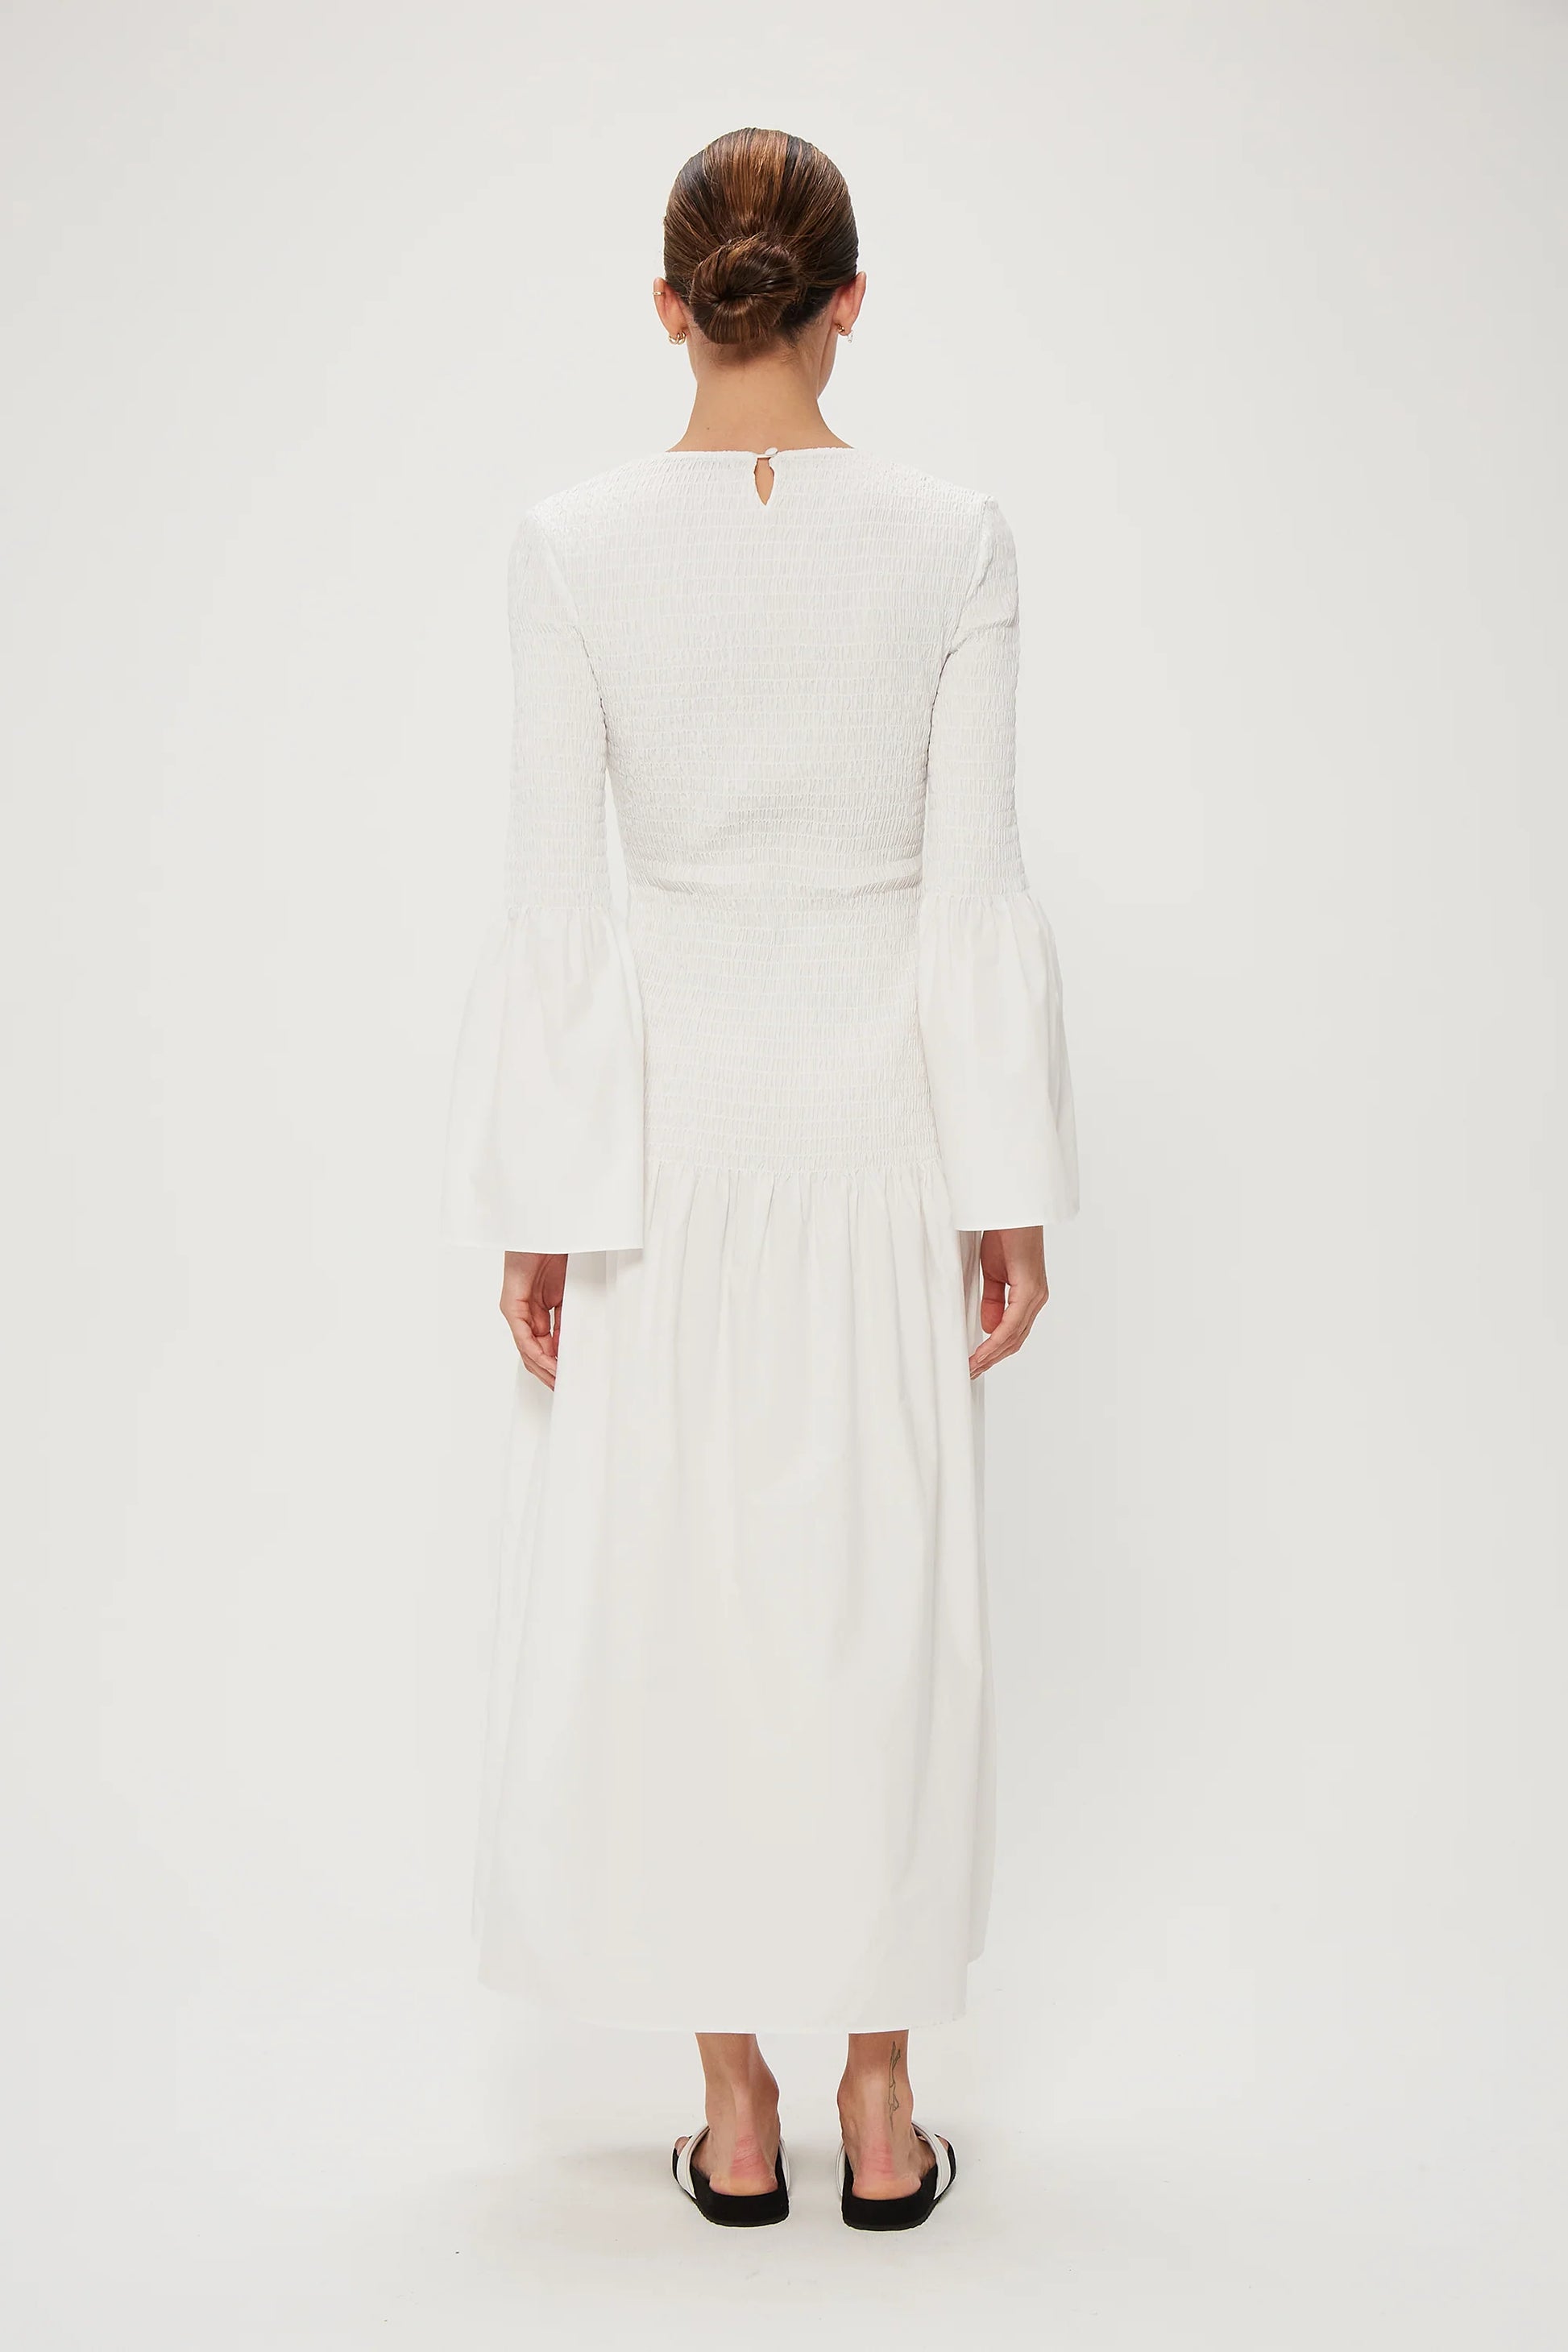 FULL FORM SHIRRED MAXI DRESS - WHITE - Leela Rose Boutique